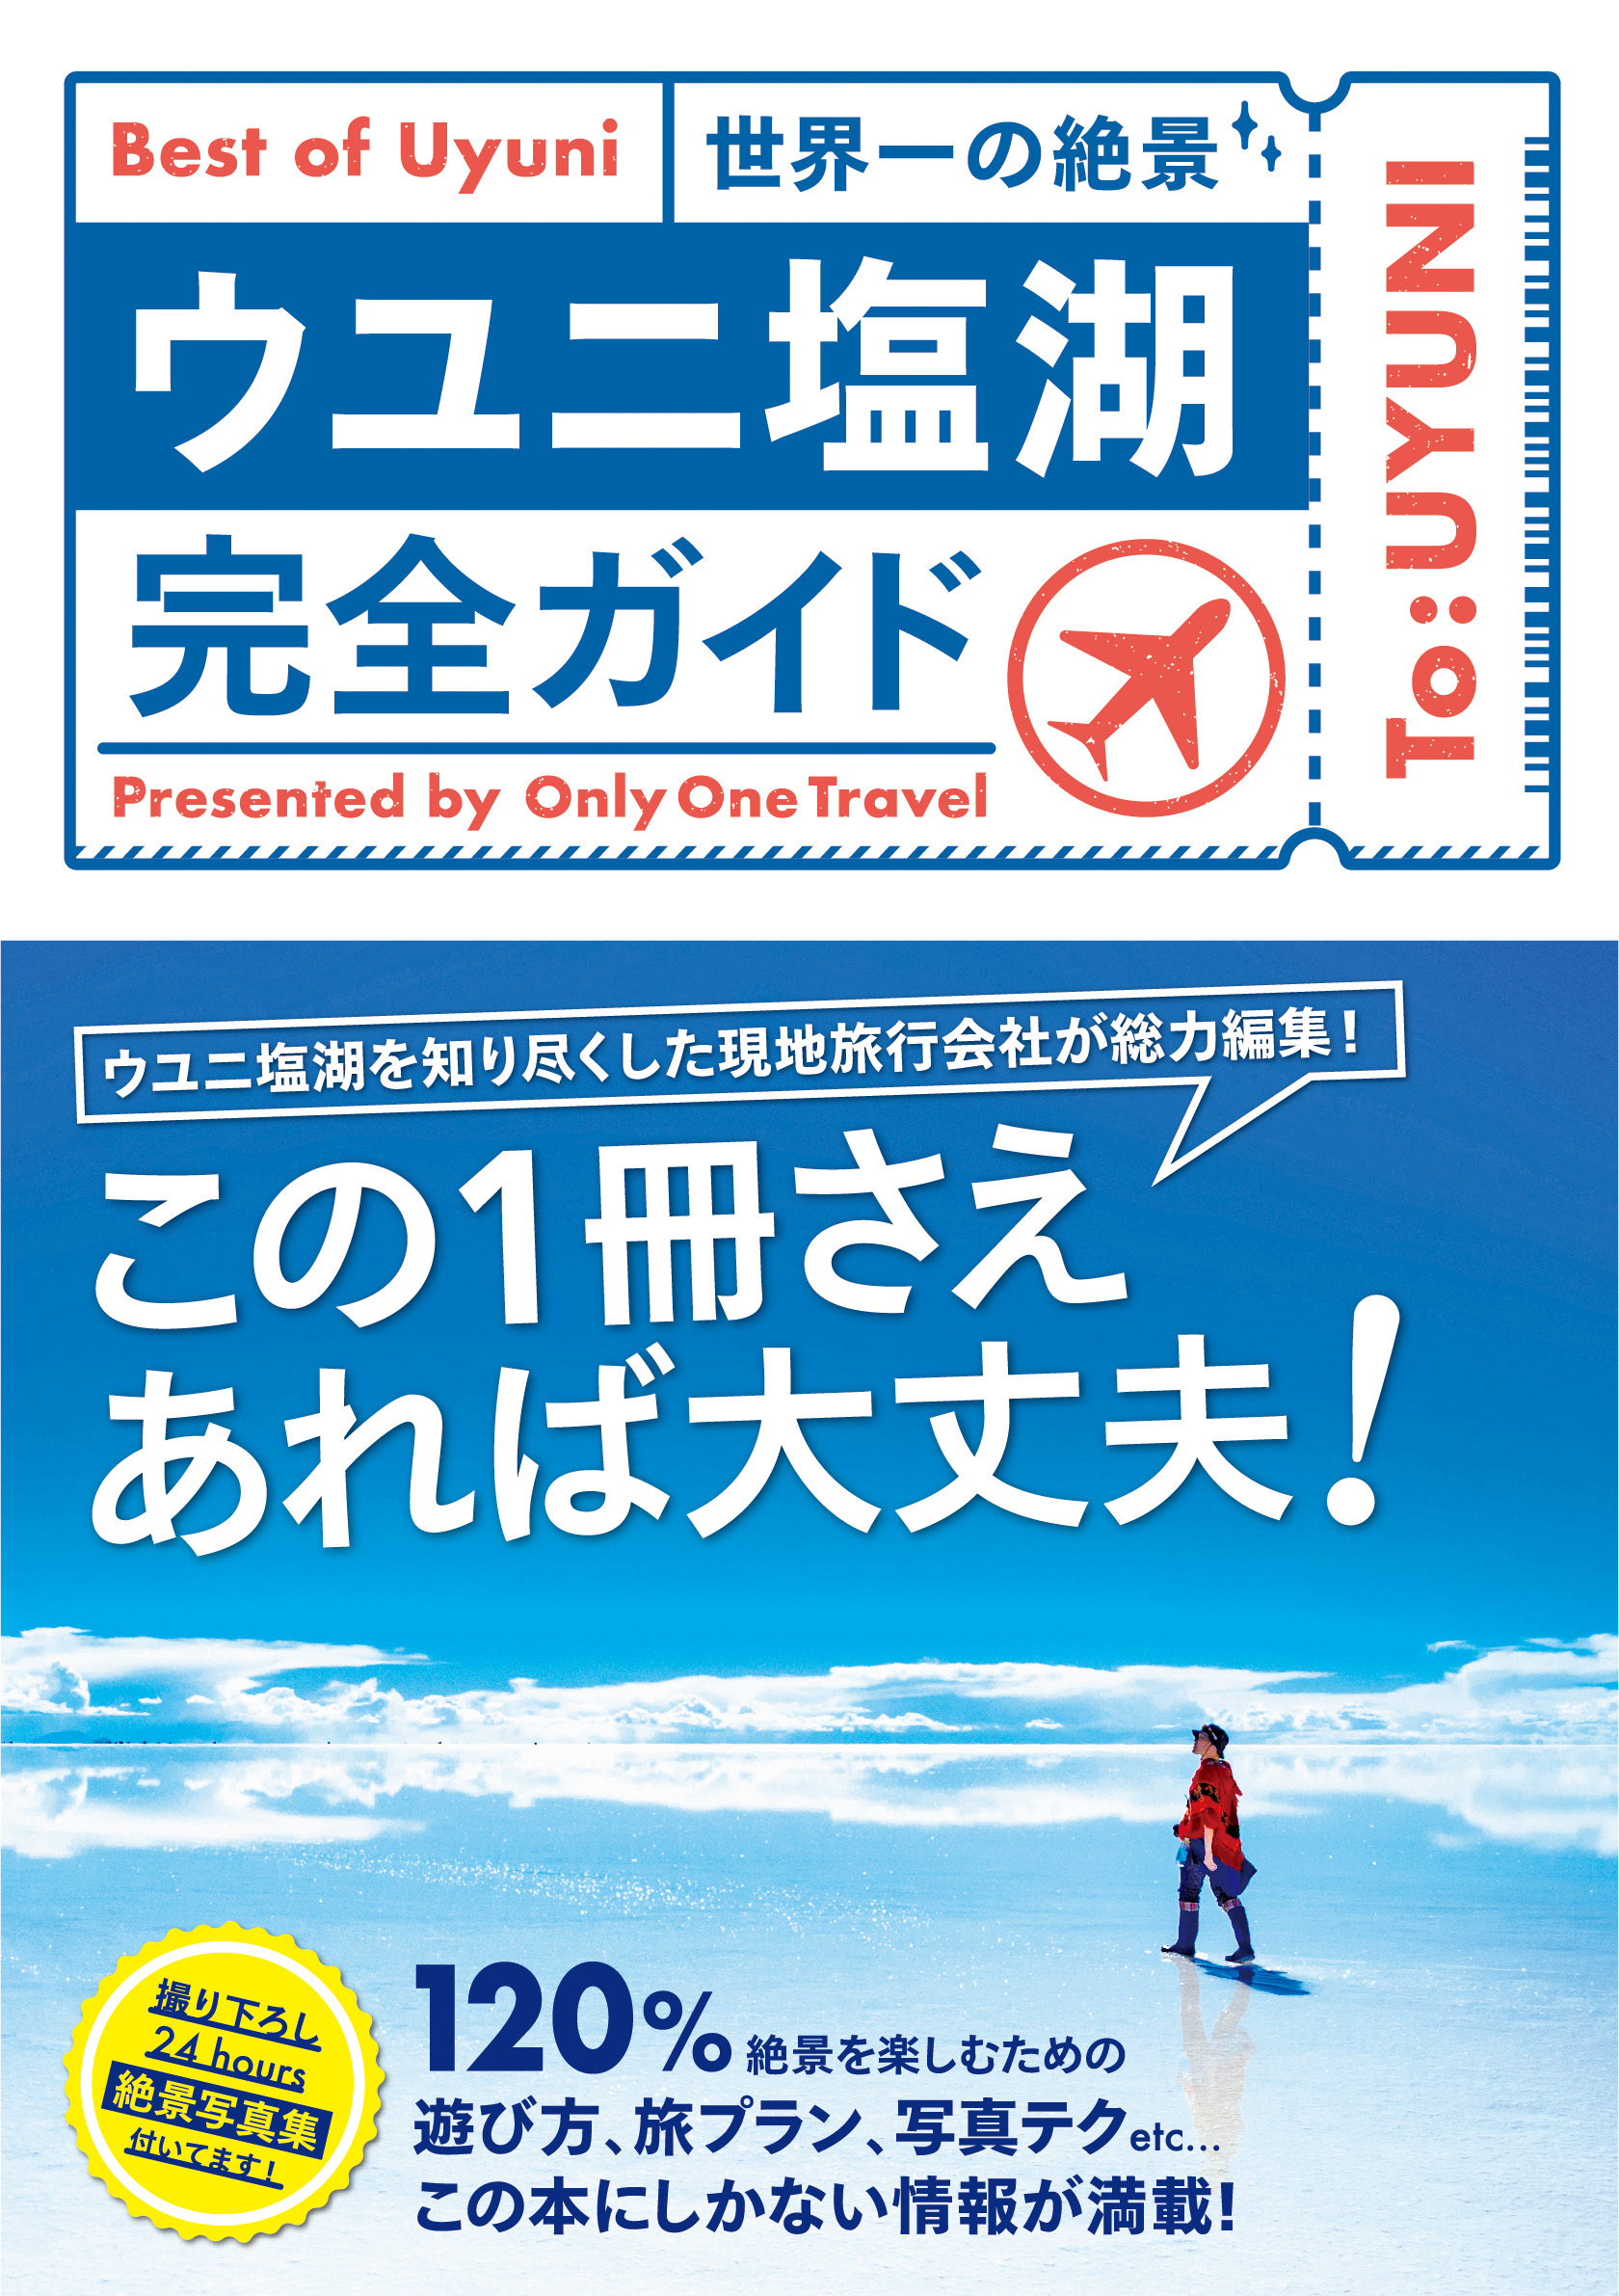 「Only One Travelの『ウユニ塩湖完全ガイド』が発売されました！」記事アイキャッチ画像